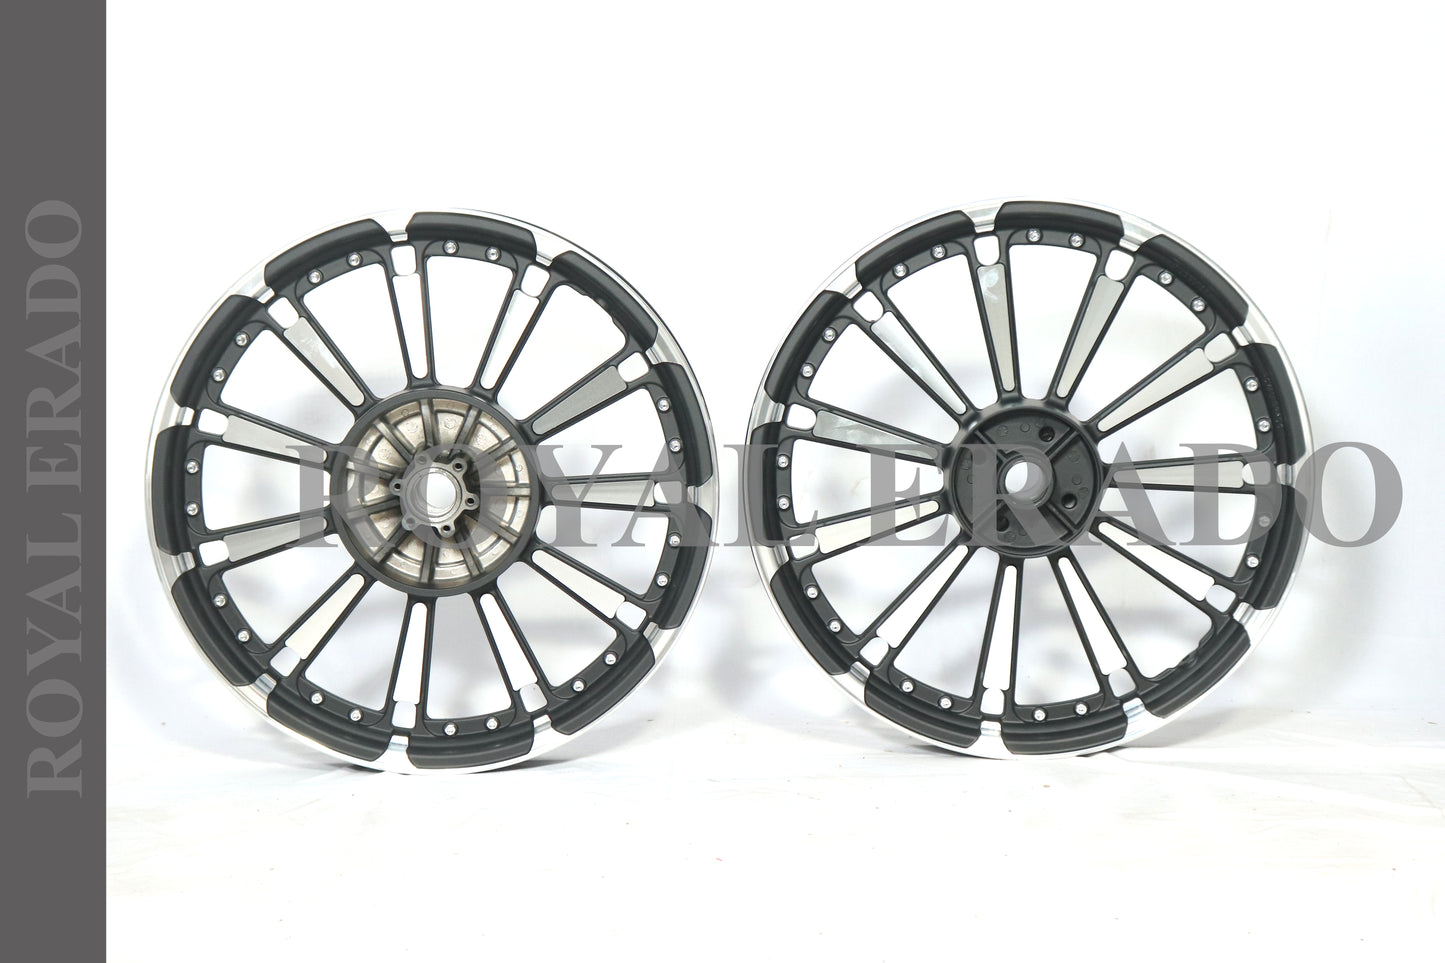 11 SPOKE RAJPUTANA design Alloy Wheel set For Royal-Enfield standard big drum